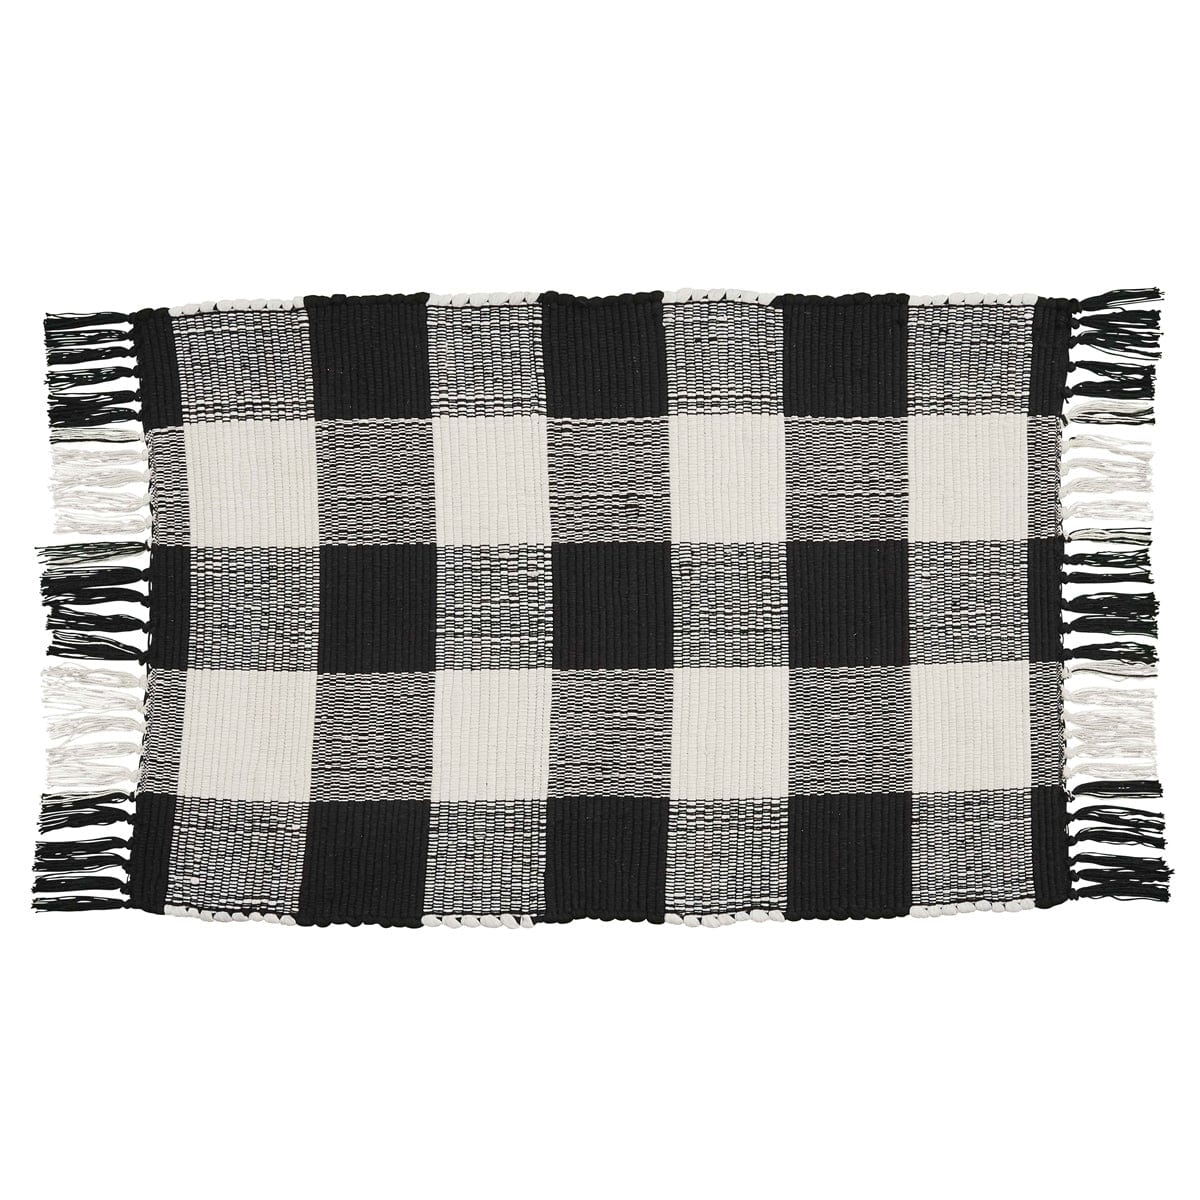 Wicklow Check in Black & Cream Woven rug 24" x 36" rectangle-Park Designs-The Village Merchant